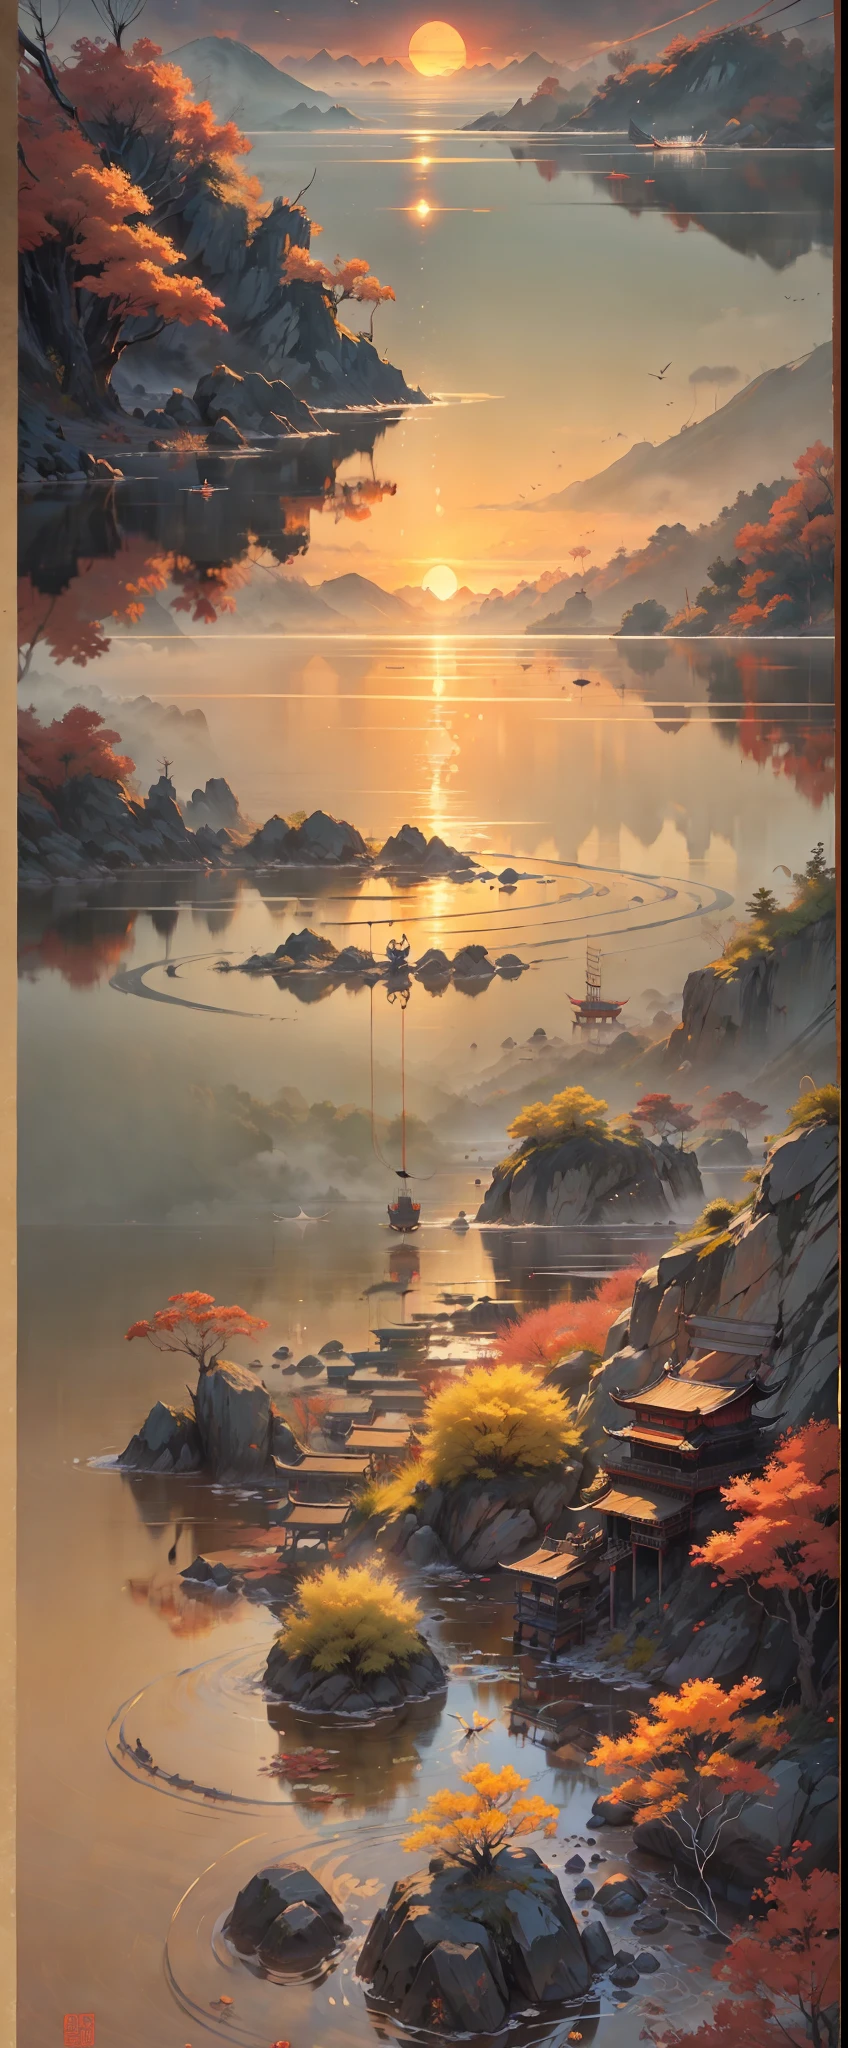 China 墨水 painting，墨水，夕陽與孤鶴共飛，秋水長久不變，古詩詞很美